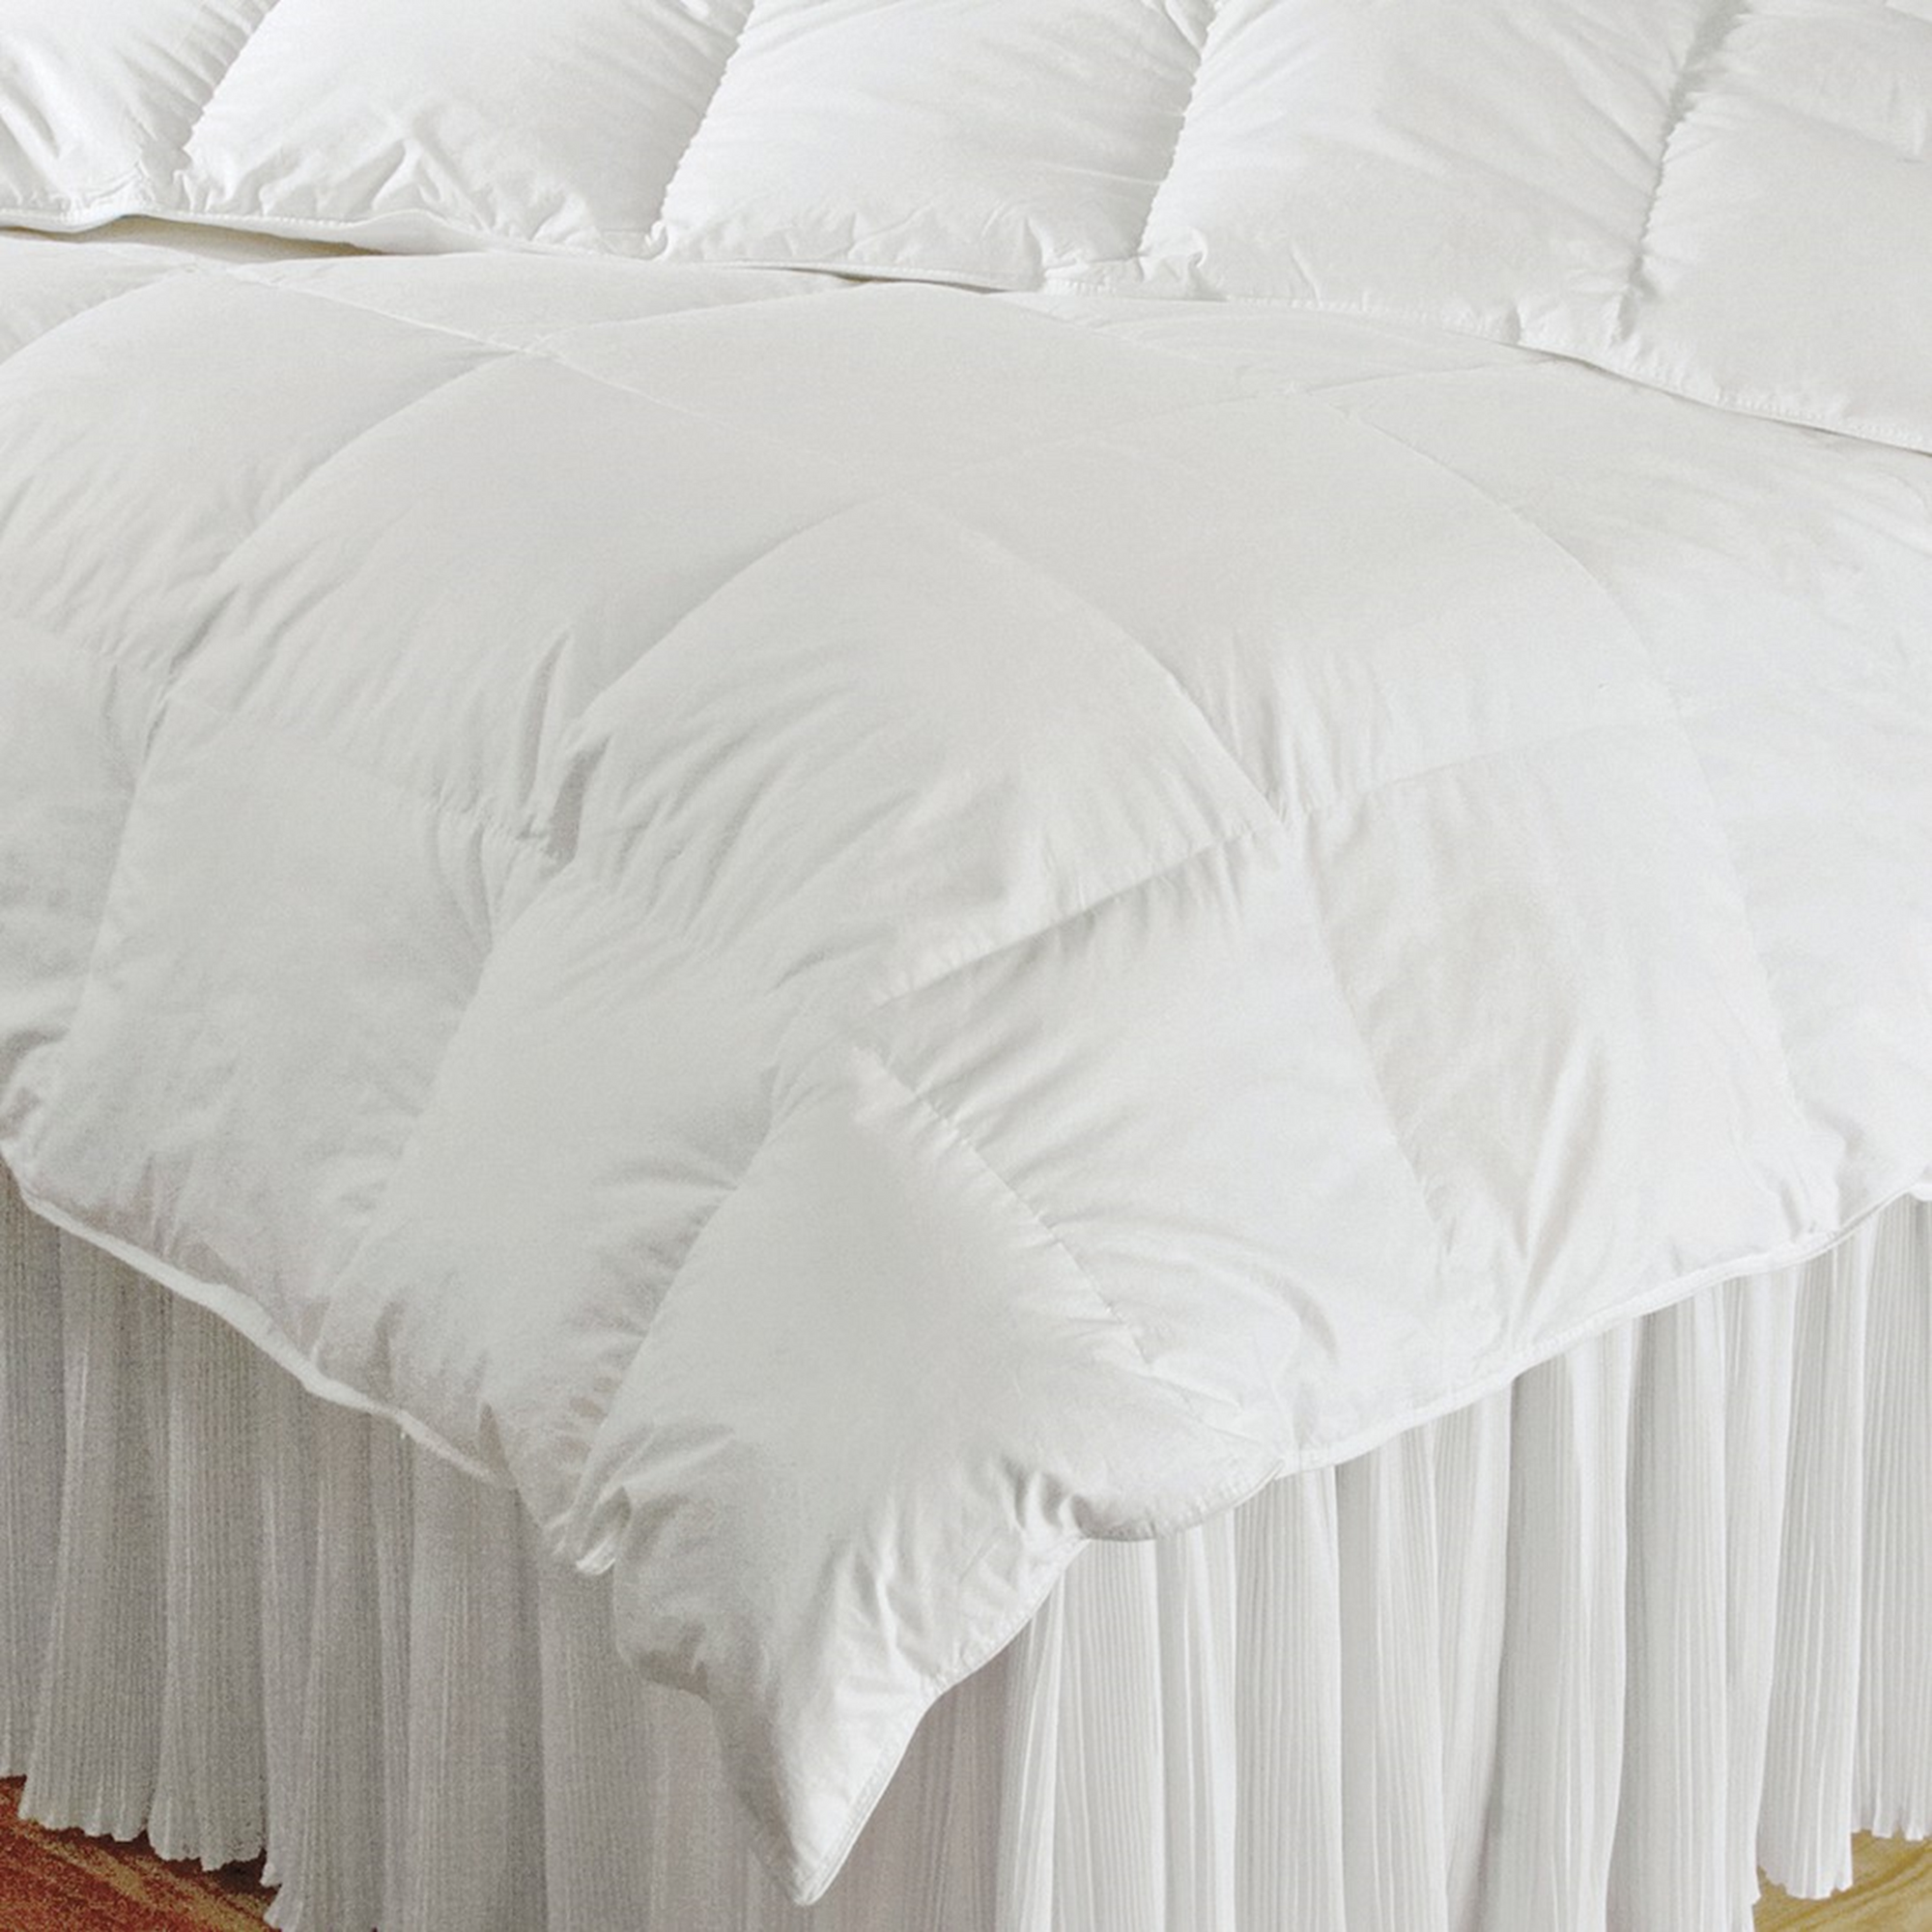 Closeup Image of Downtown Company Villa European White Down Comforter